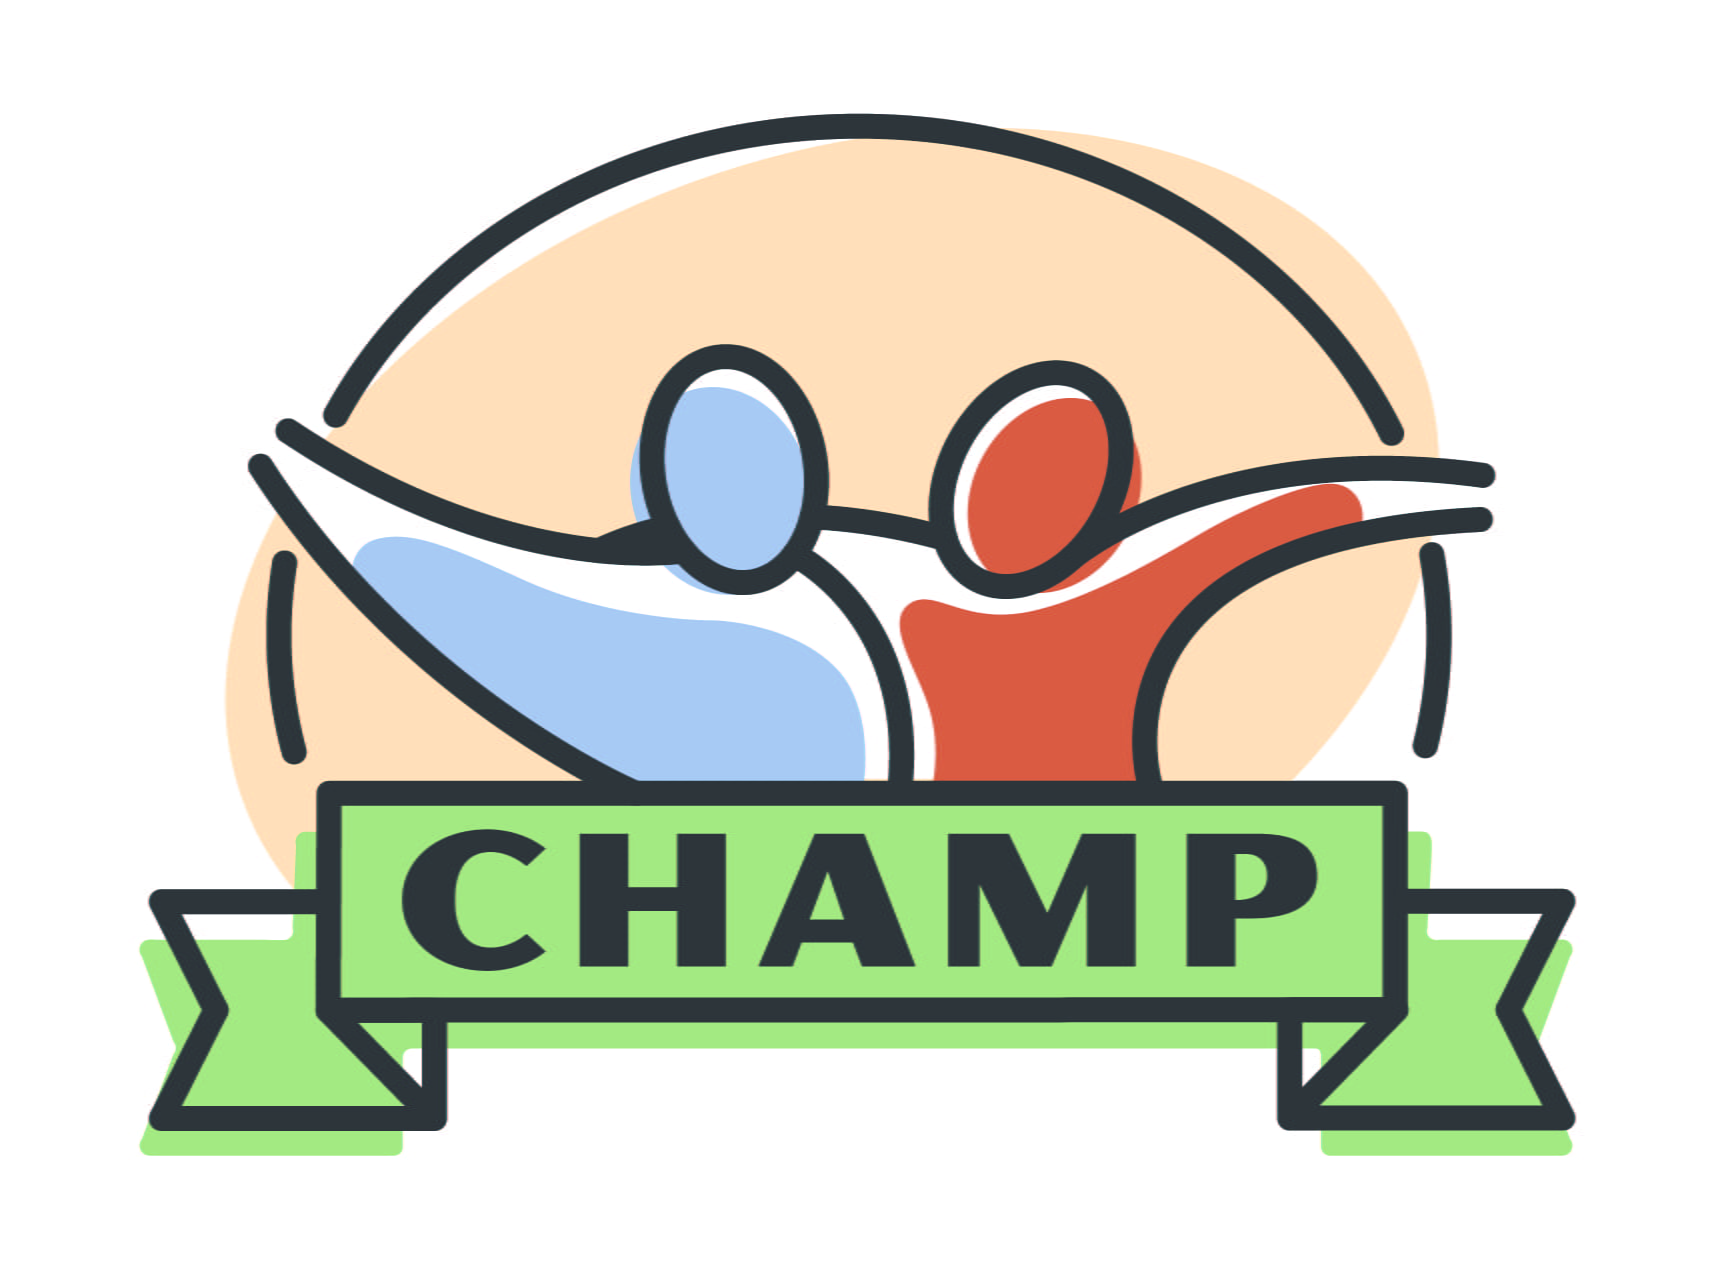 IU CHAMP program logo